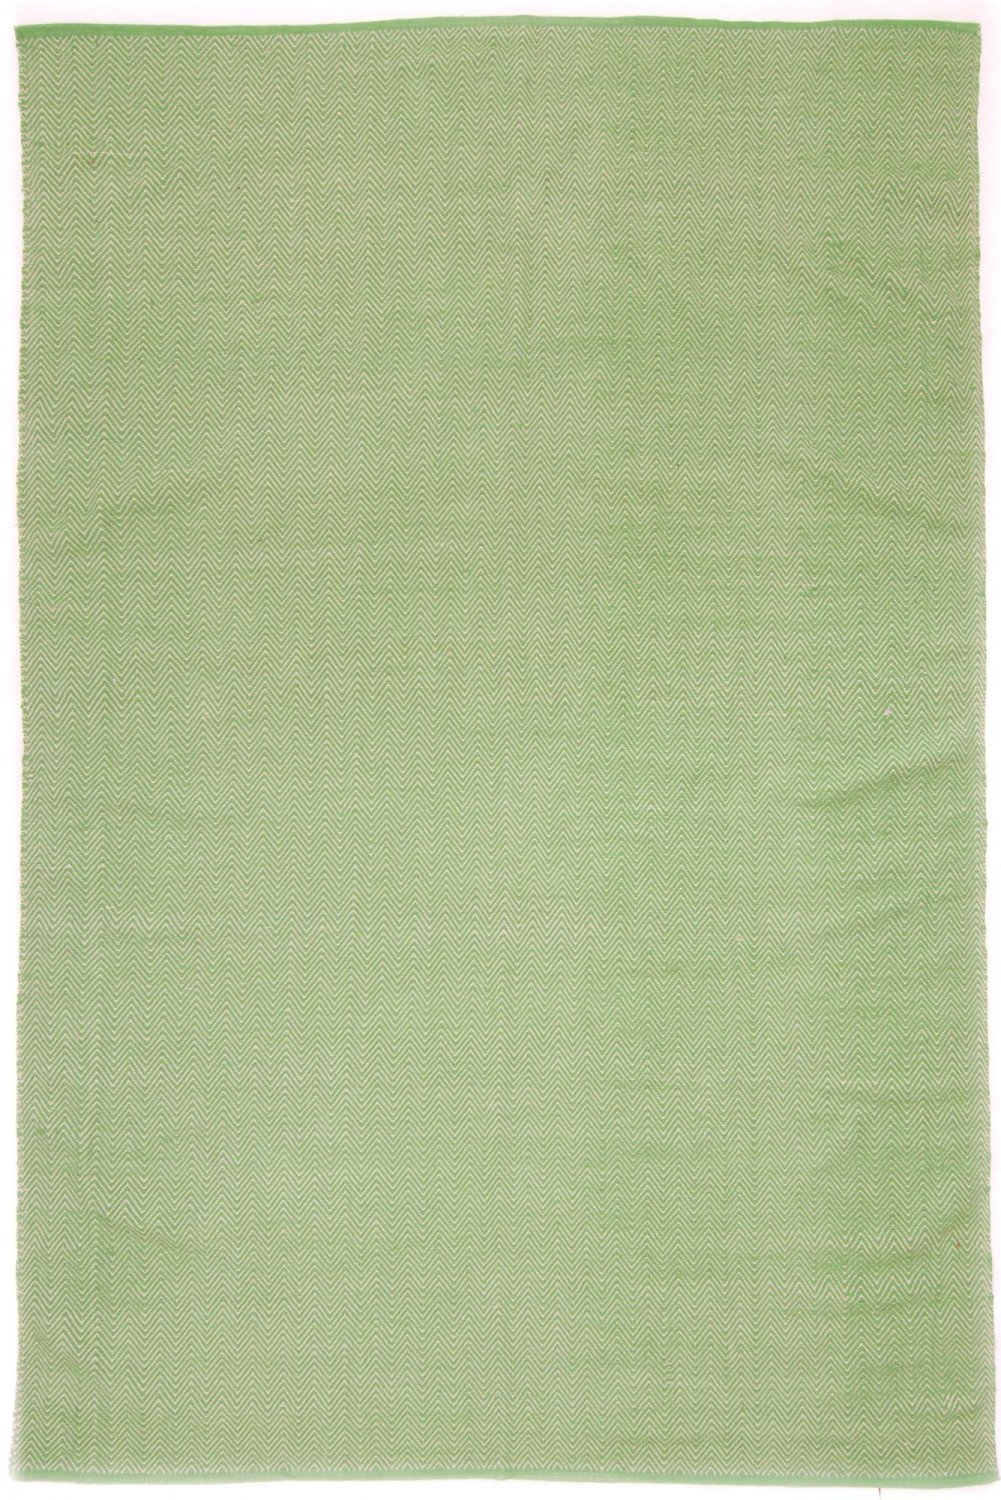 Voddenkleed - Marina (groen)